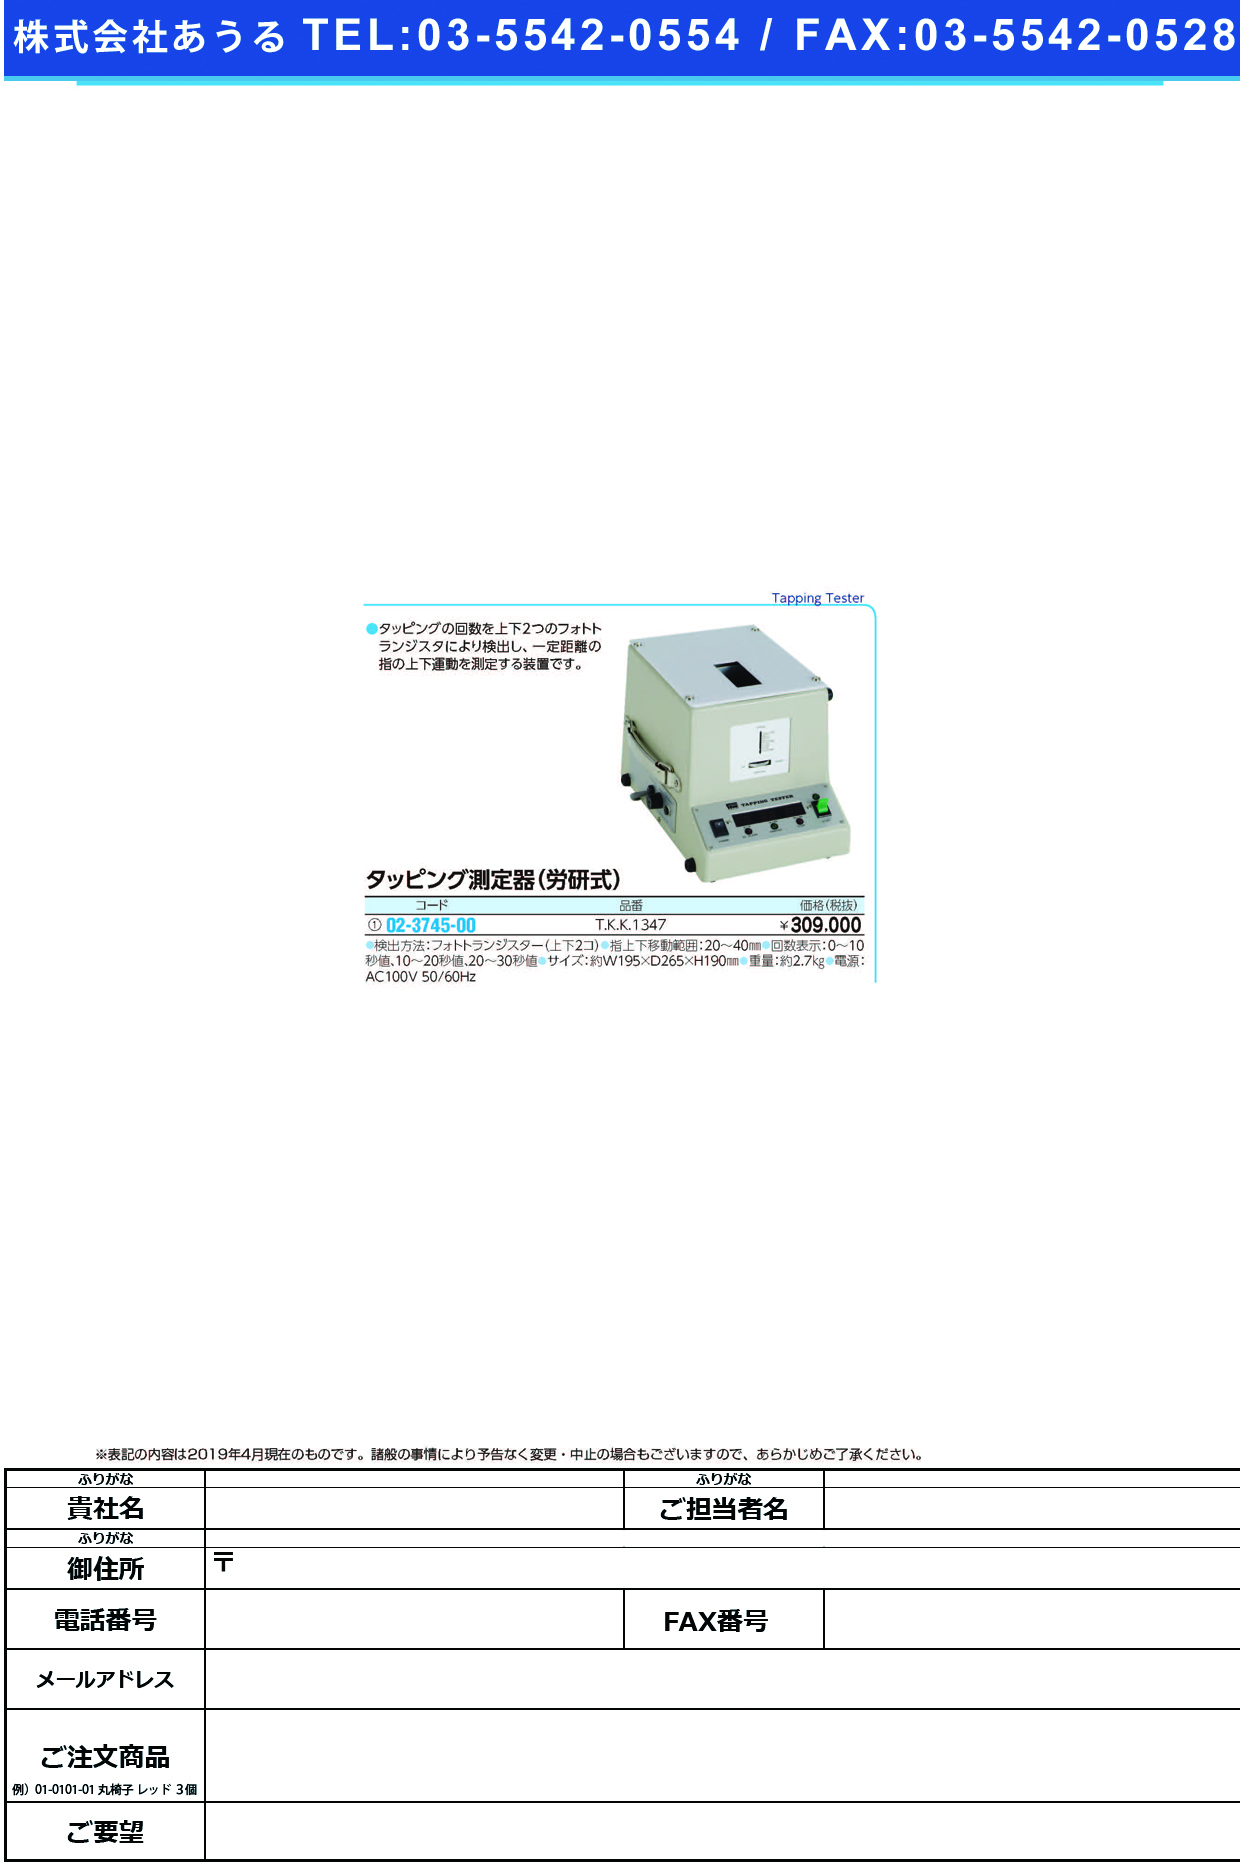 (02-3745-00)タッピング測定器（労研式） TKK-1347 ﾀｯﾋﾟﾝｸﾞｿｸﾃｲｷ(ﾛｳｹﾝｼｷ)(竹井機器工業)【1台単位】【2019年カタログ商品】